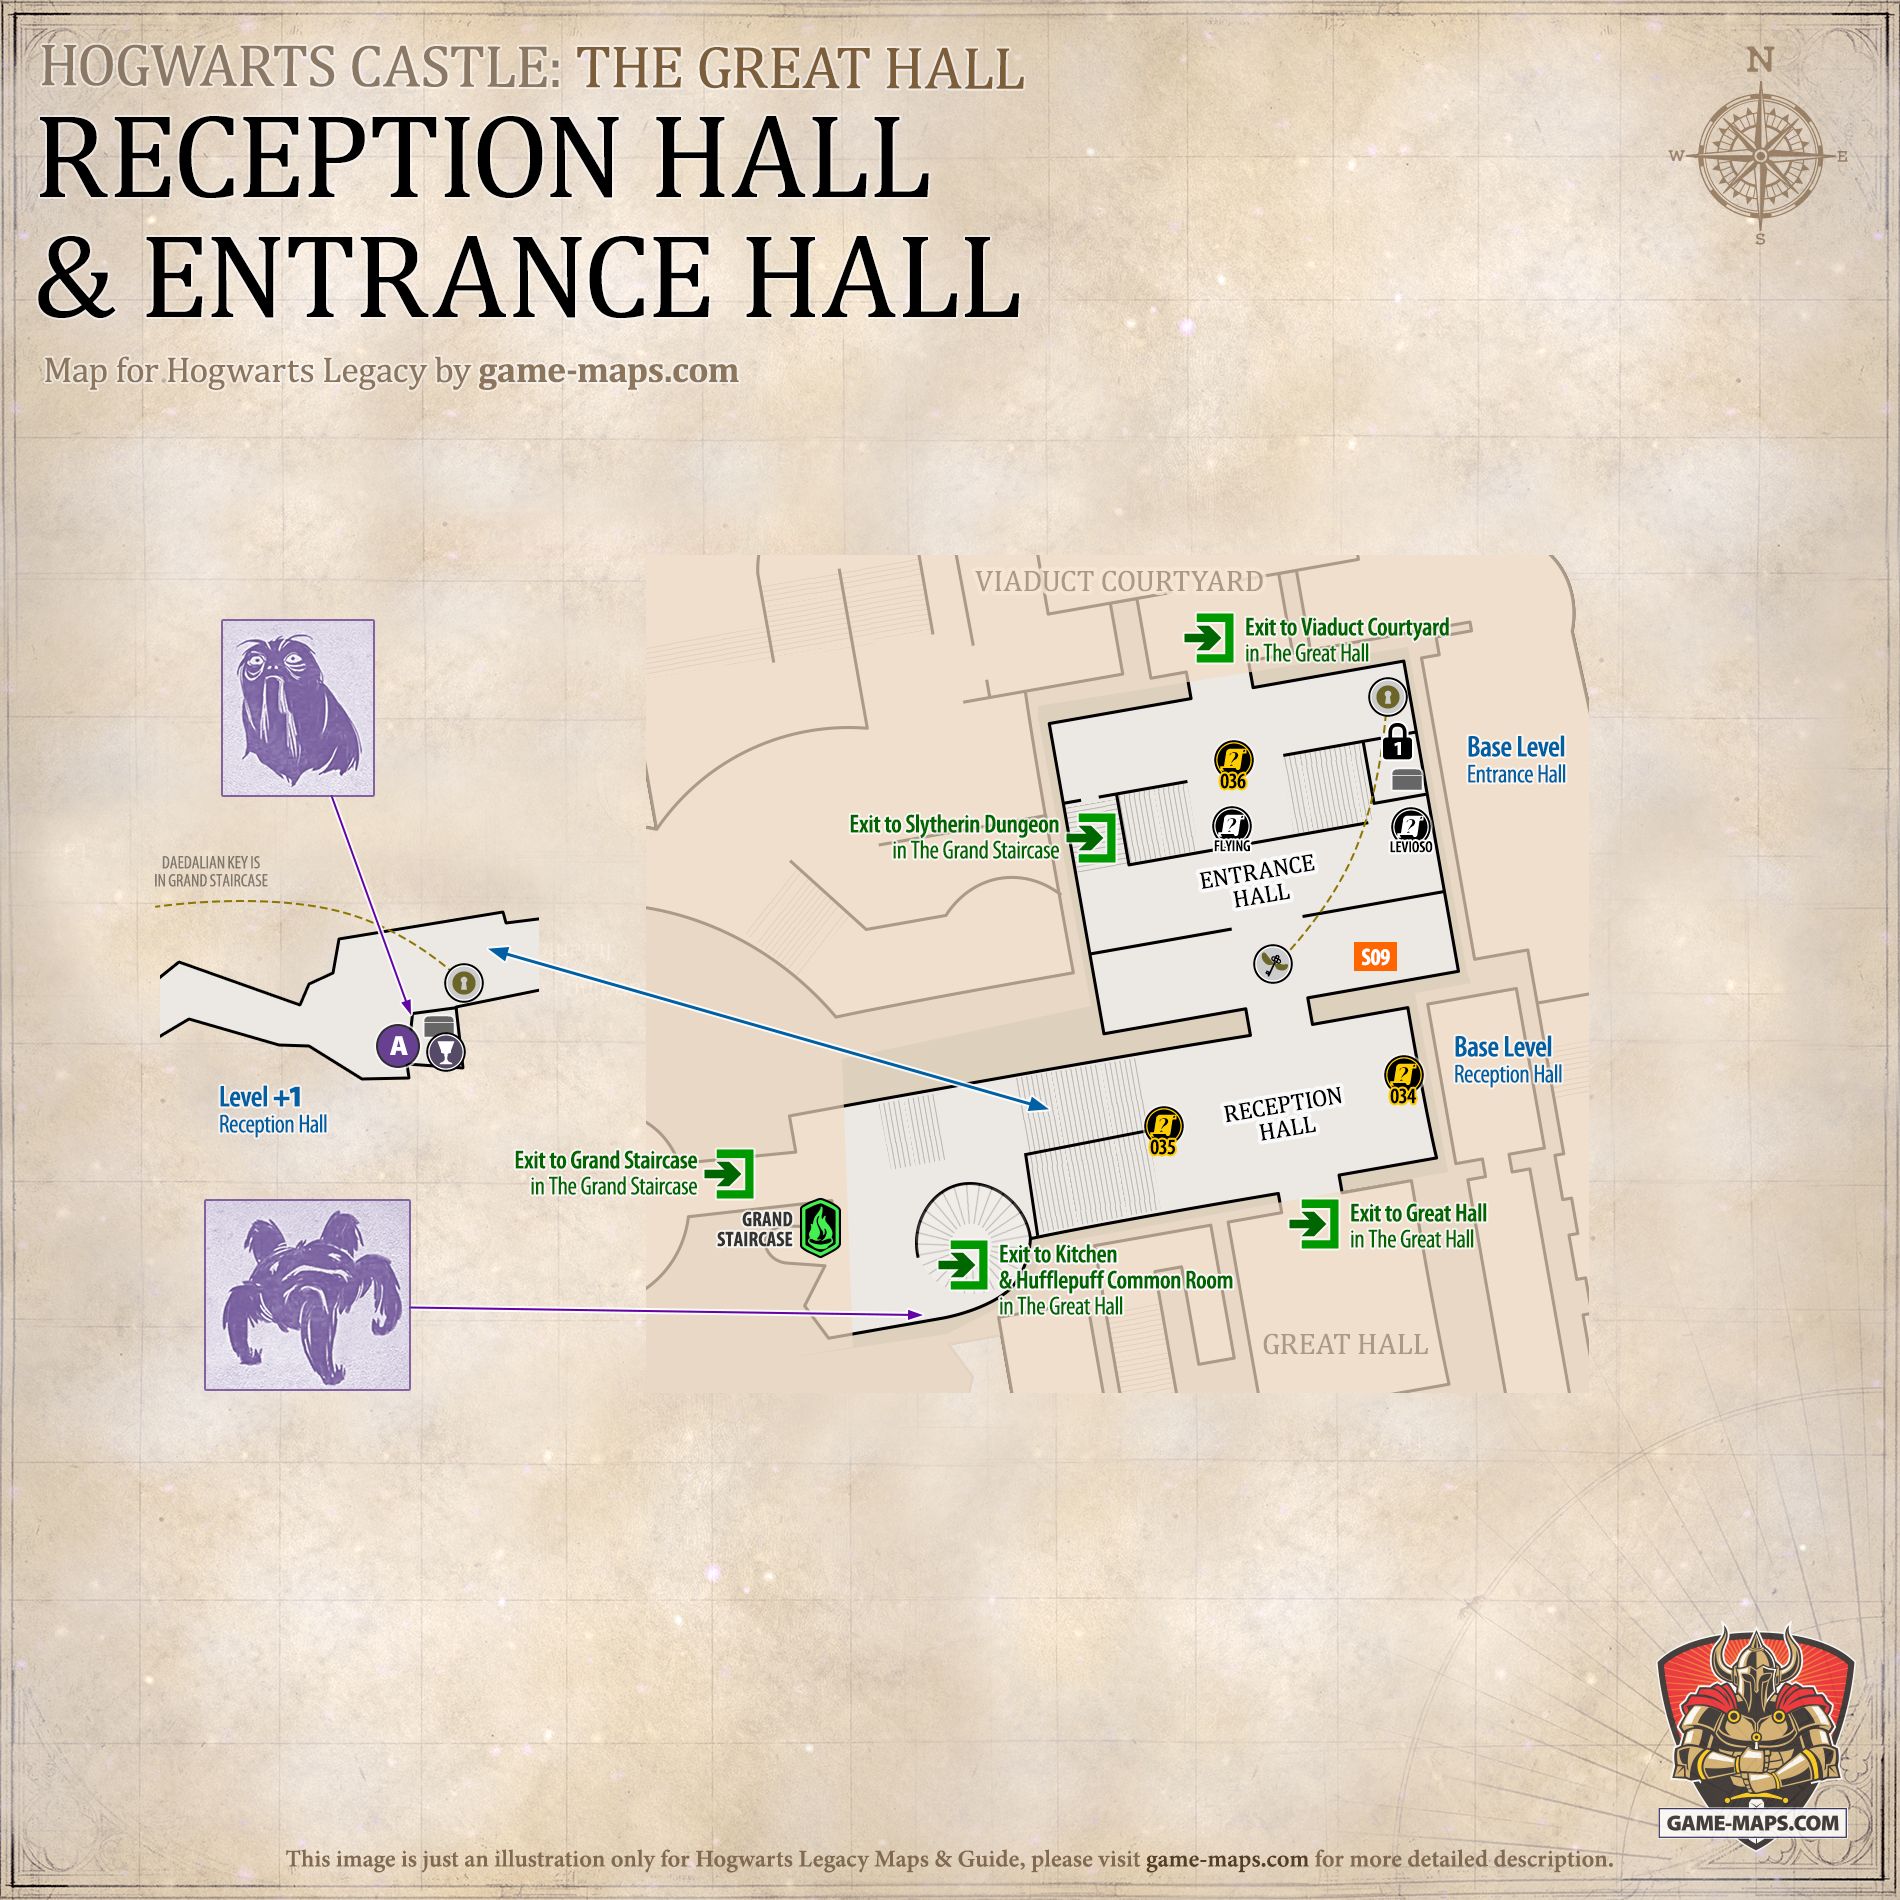 Entrance Hall & Reception Hall  Map for Hogwarts Legacy